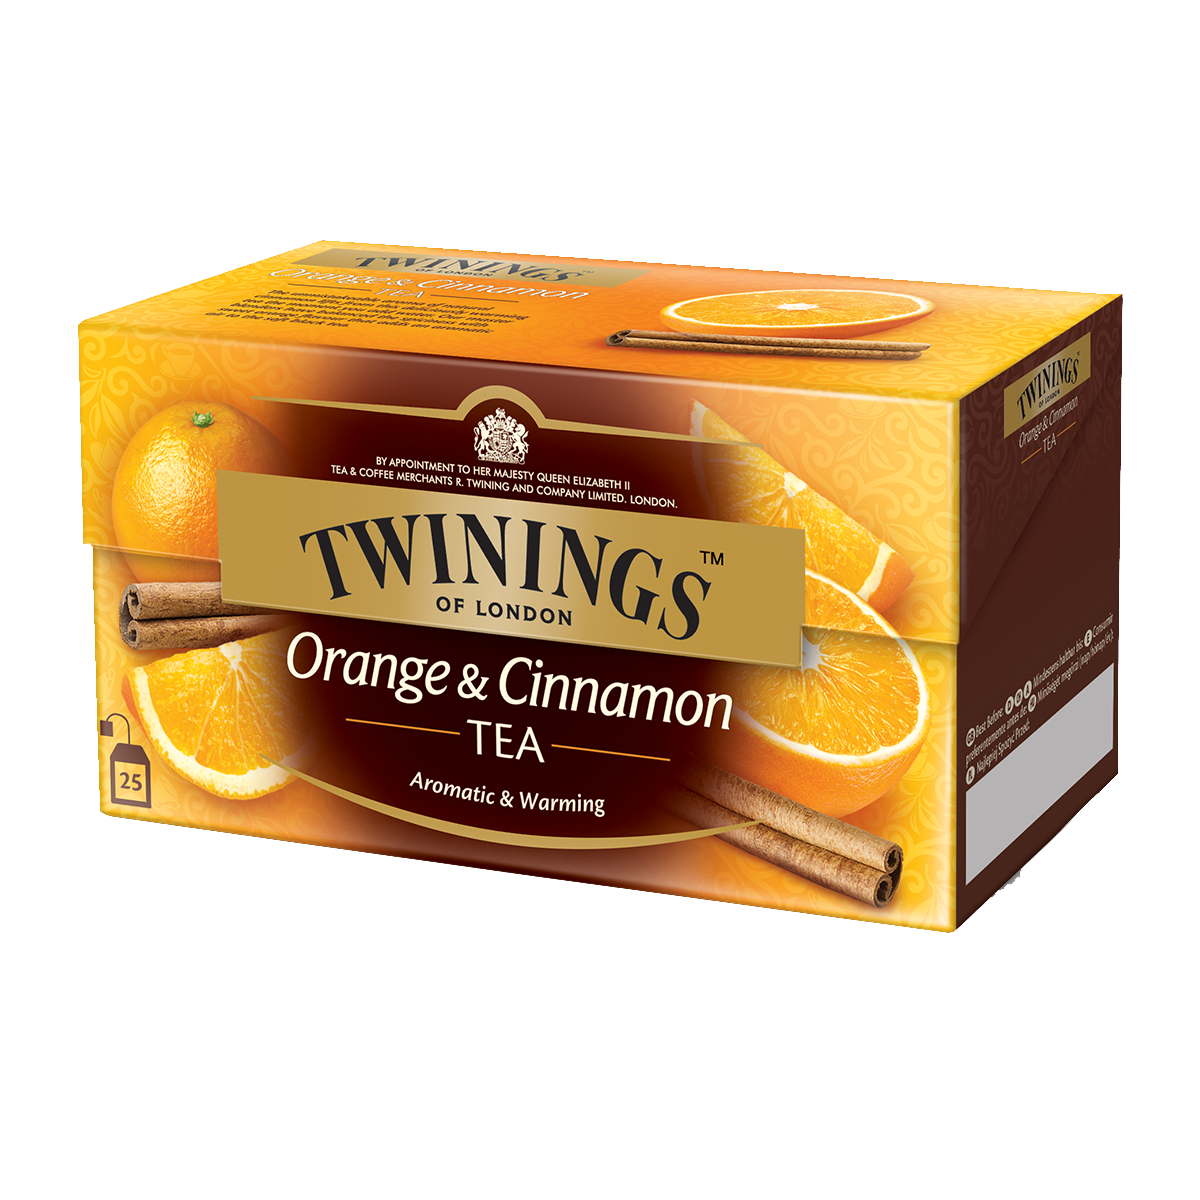  Orange & Cinnamon - aromatisierte Schwarztee